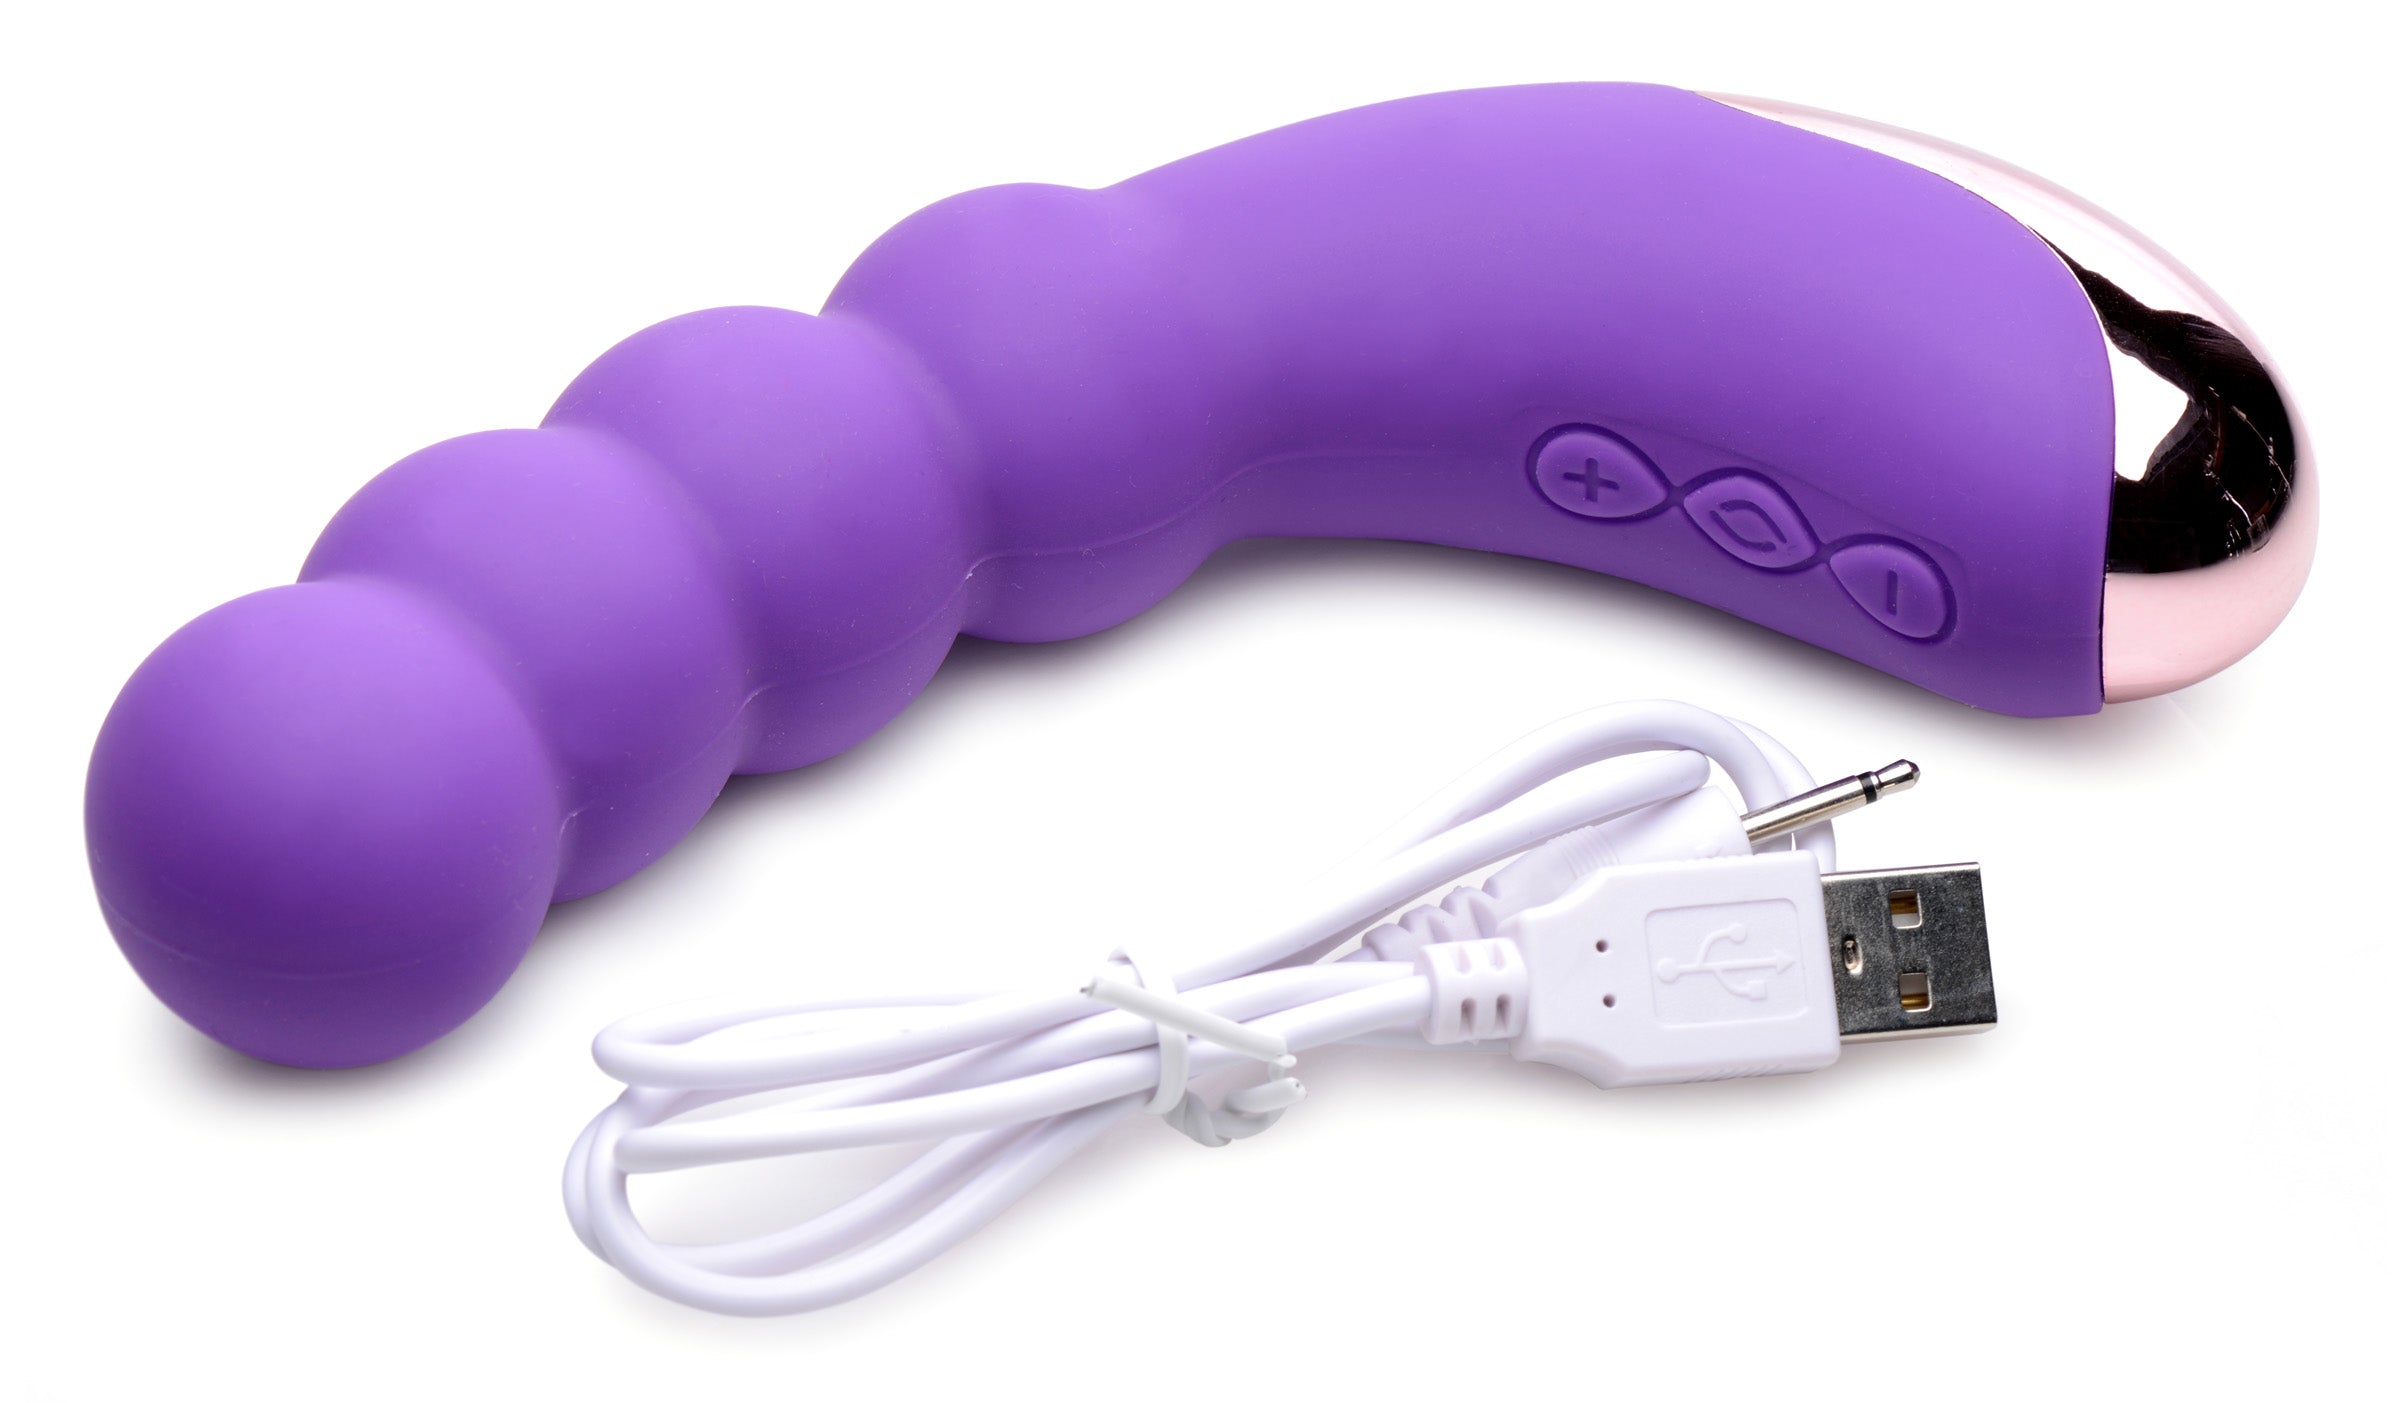 50X Silicone Beaded Vibrator - Purple